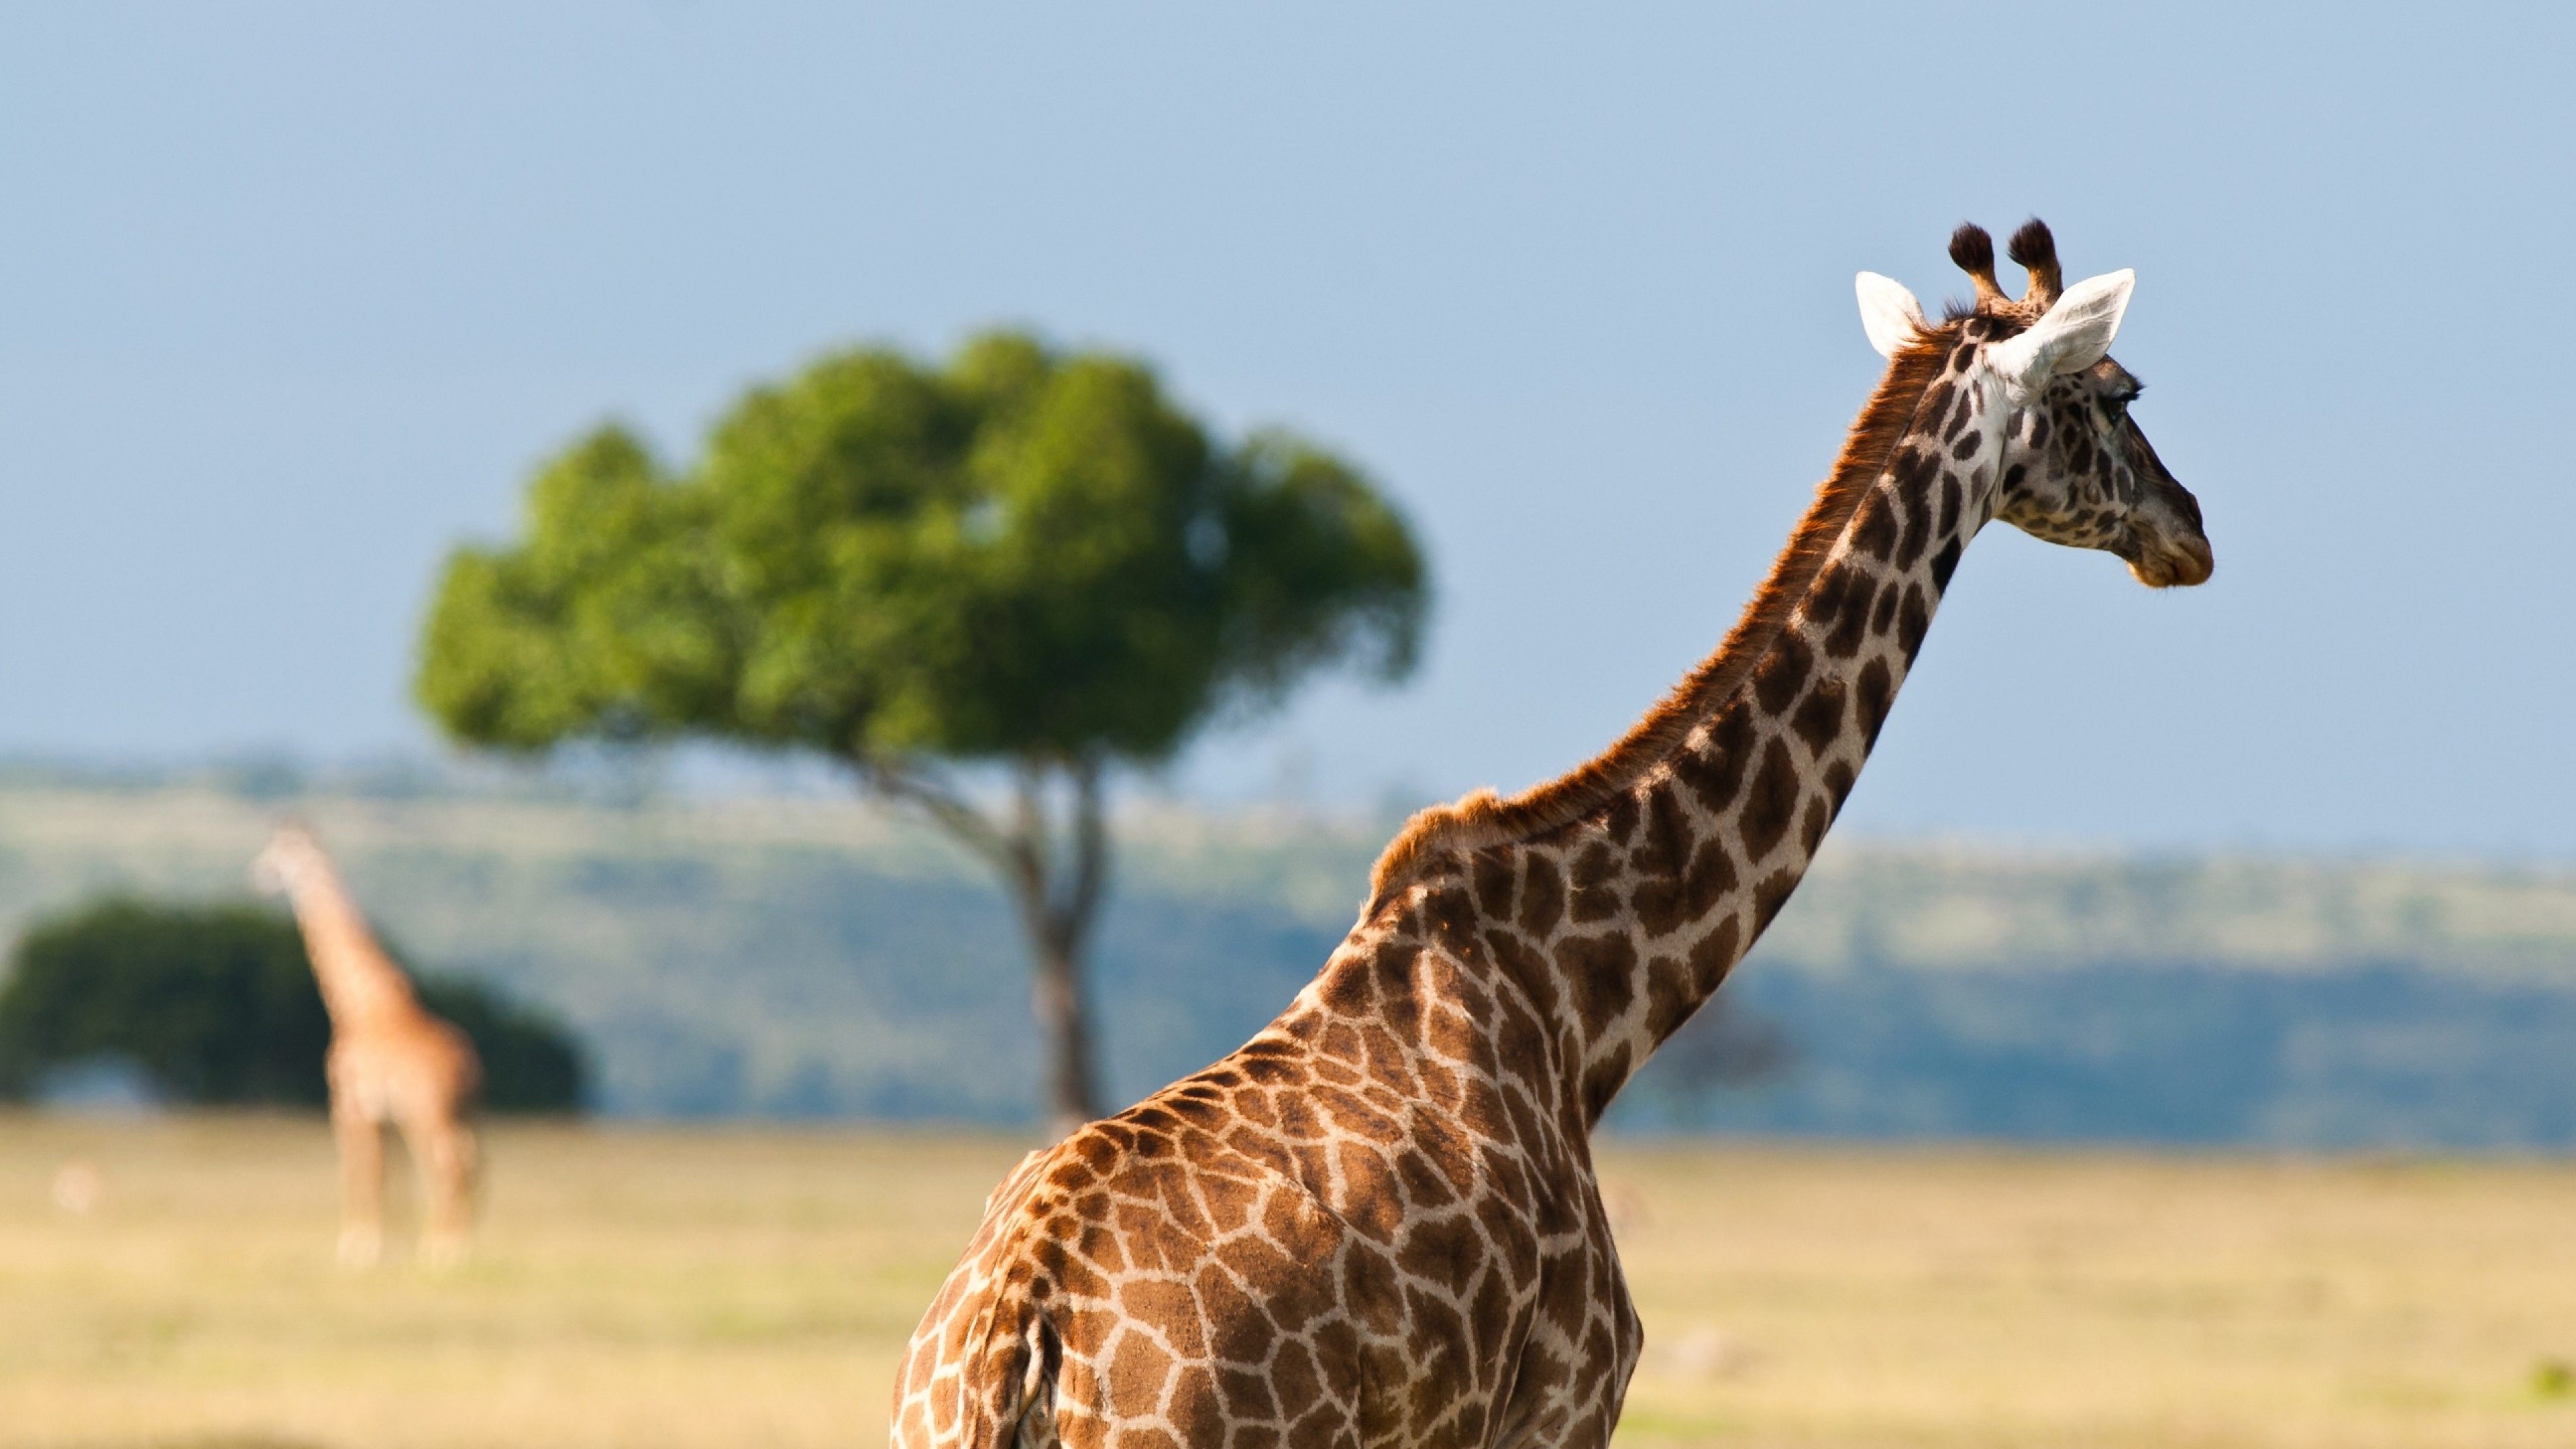 Giraffe: Africa, Desert, Nature, The tallest mammal in the world. 3840x2160 4K Wallpaper.